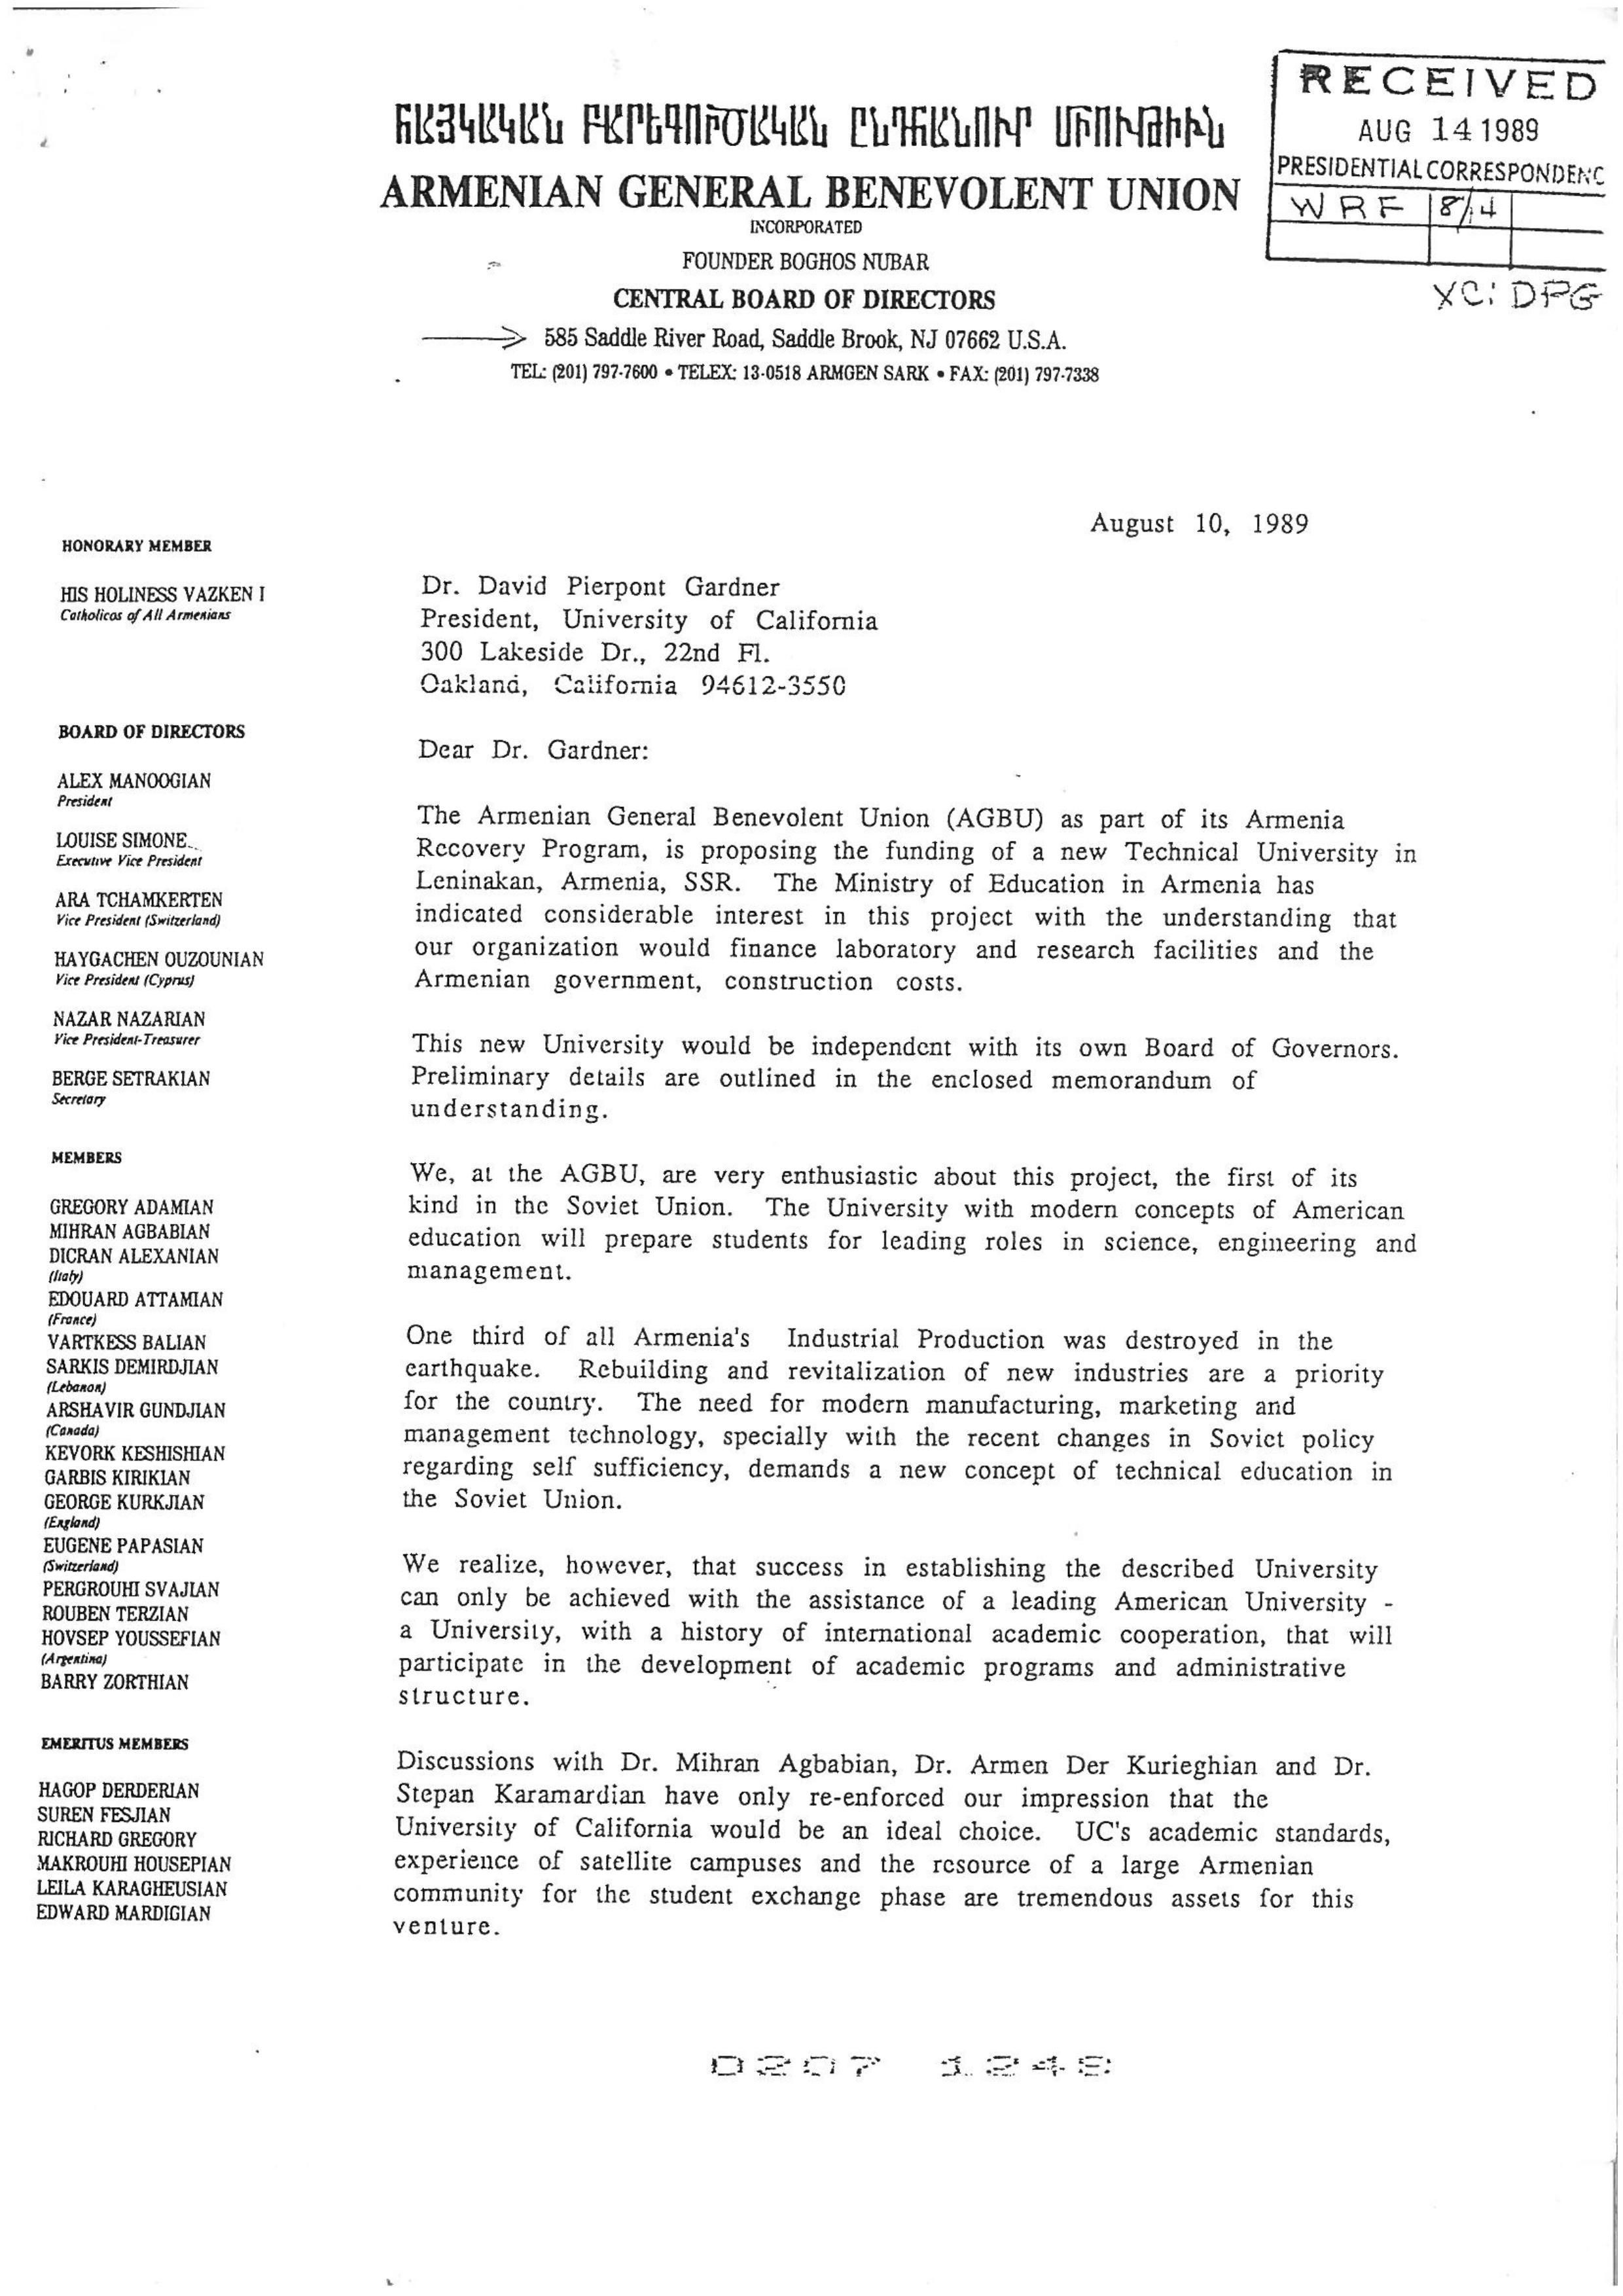 Letter sent by Louise Manoogian Simone to President, David Gartner of the University of California.